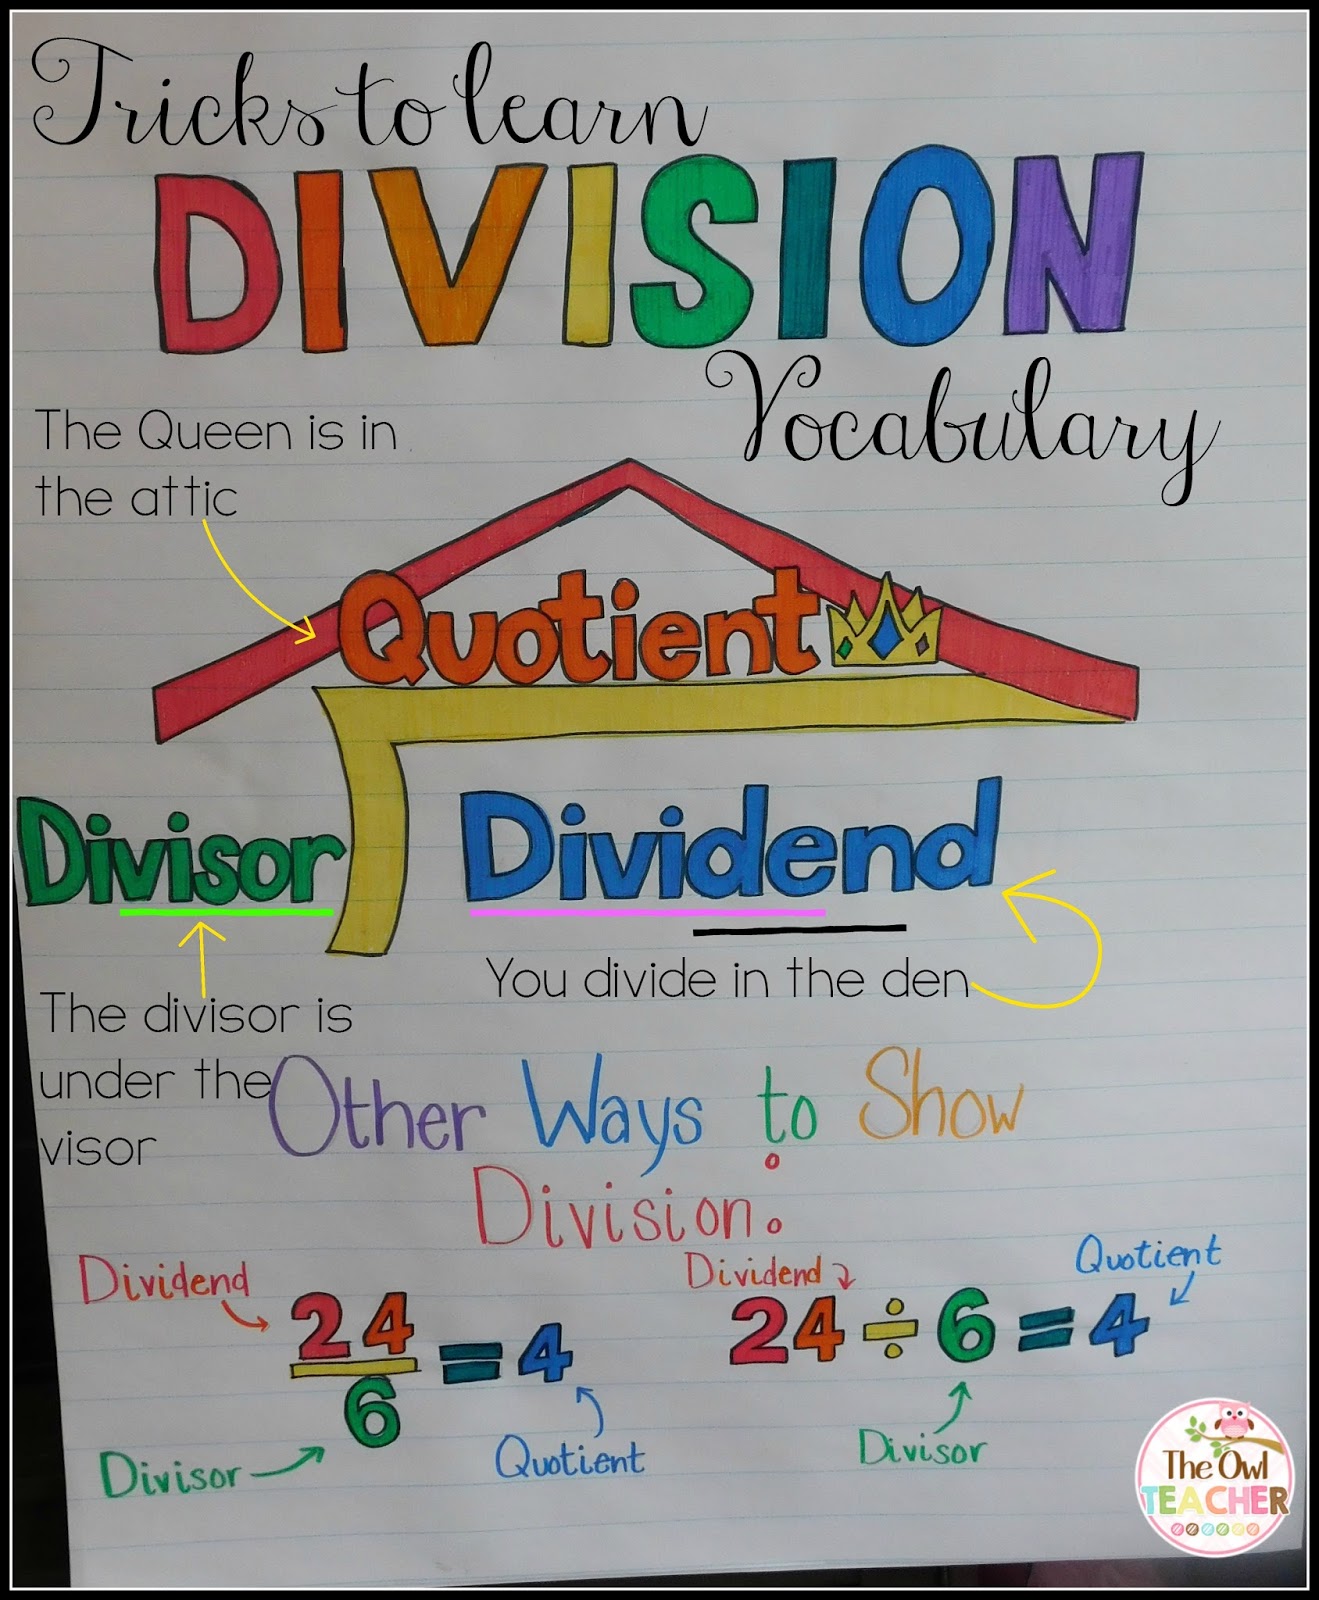 Division Steps Anchor Chart